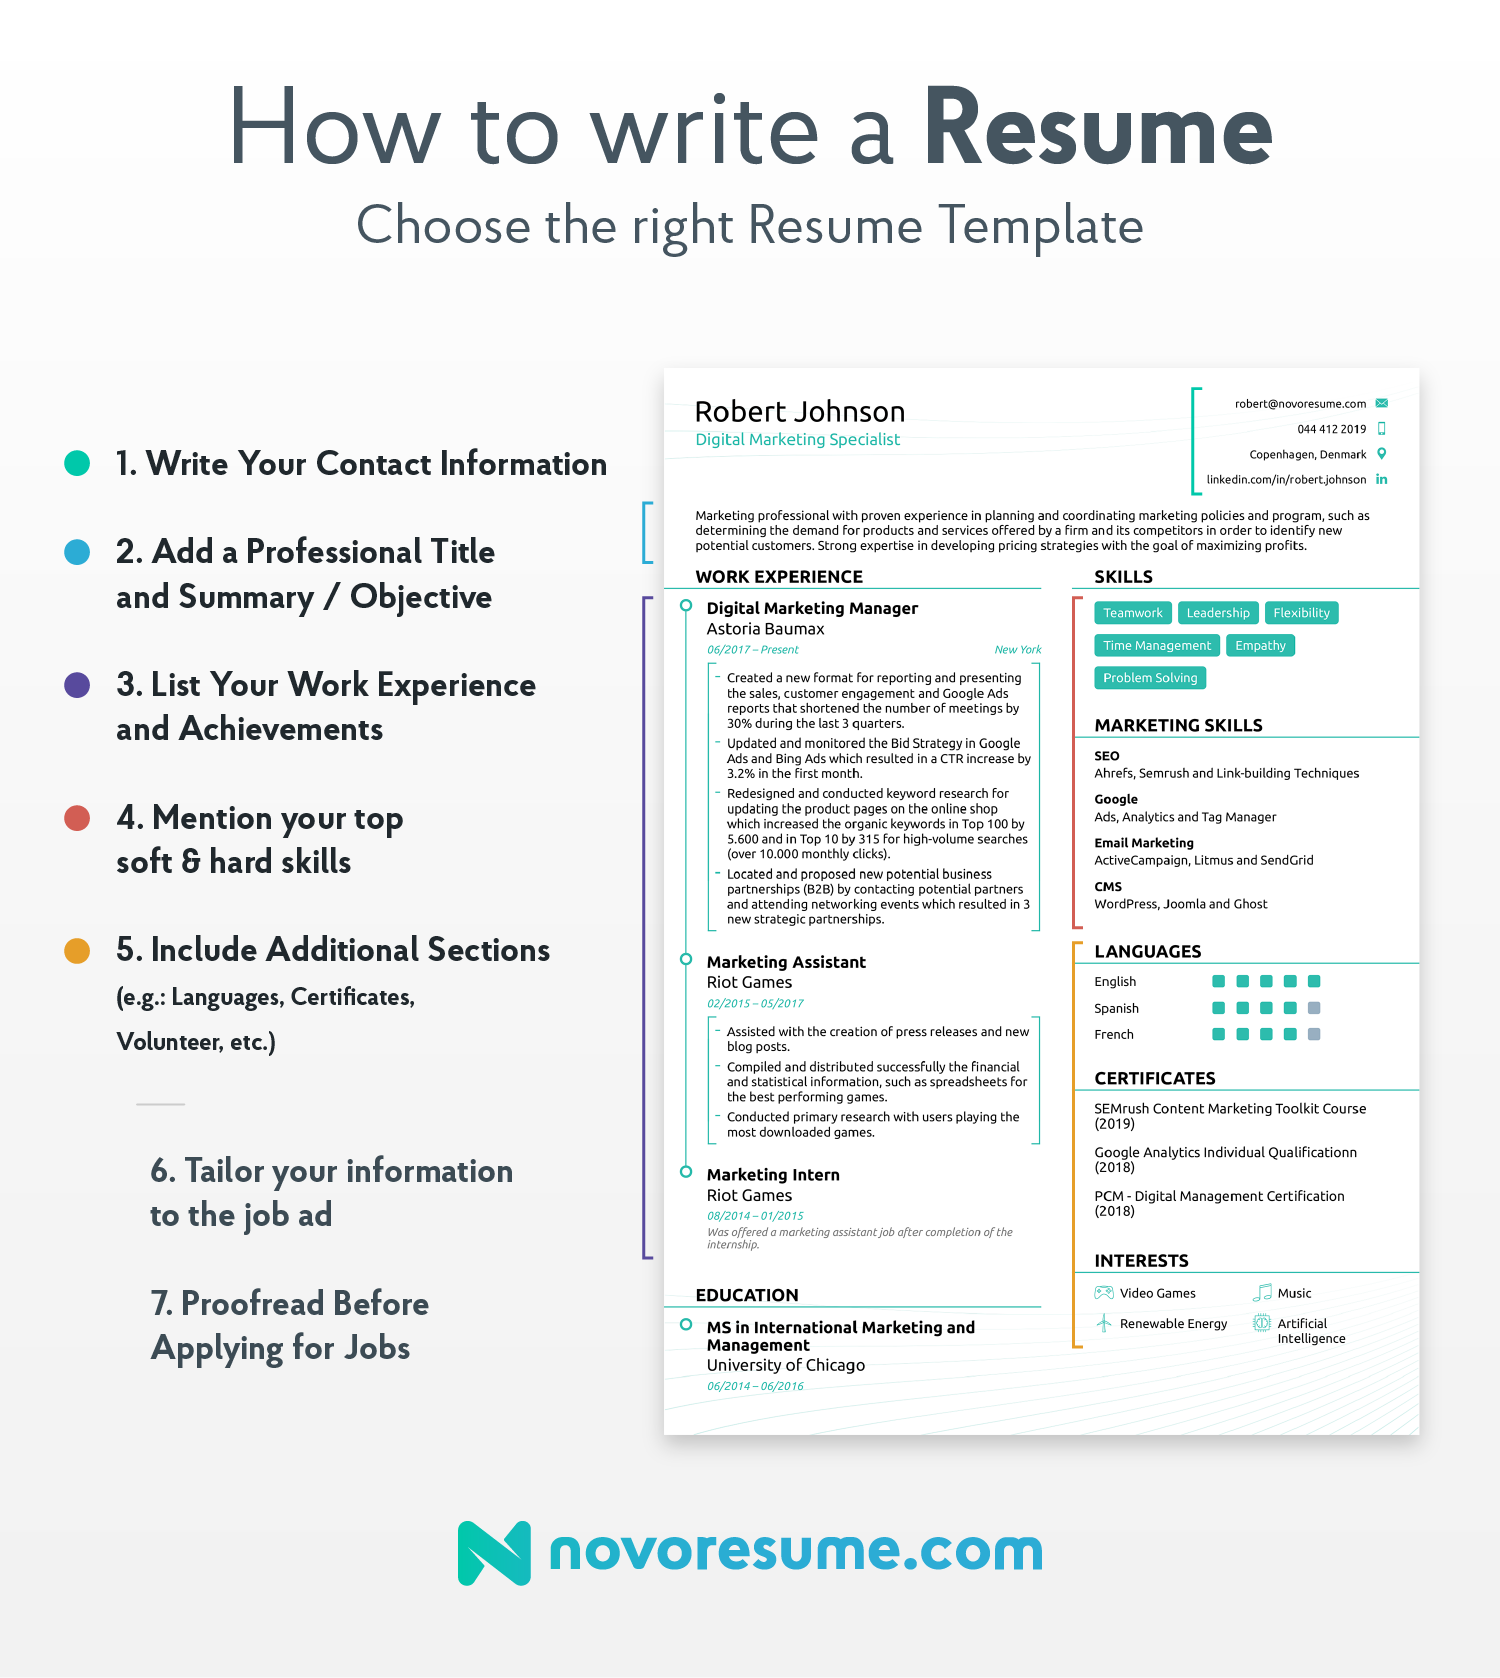 How To Write A Resume How To Make A Resume how to write a resume|wikiresume.com